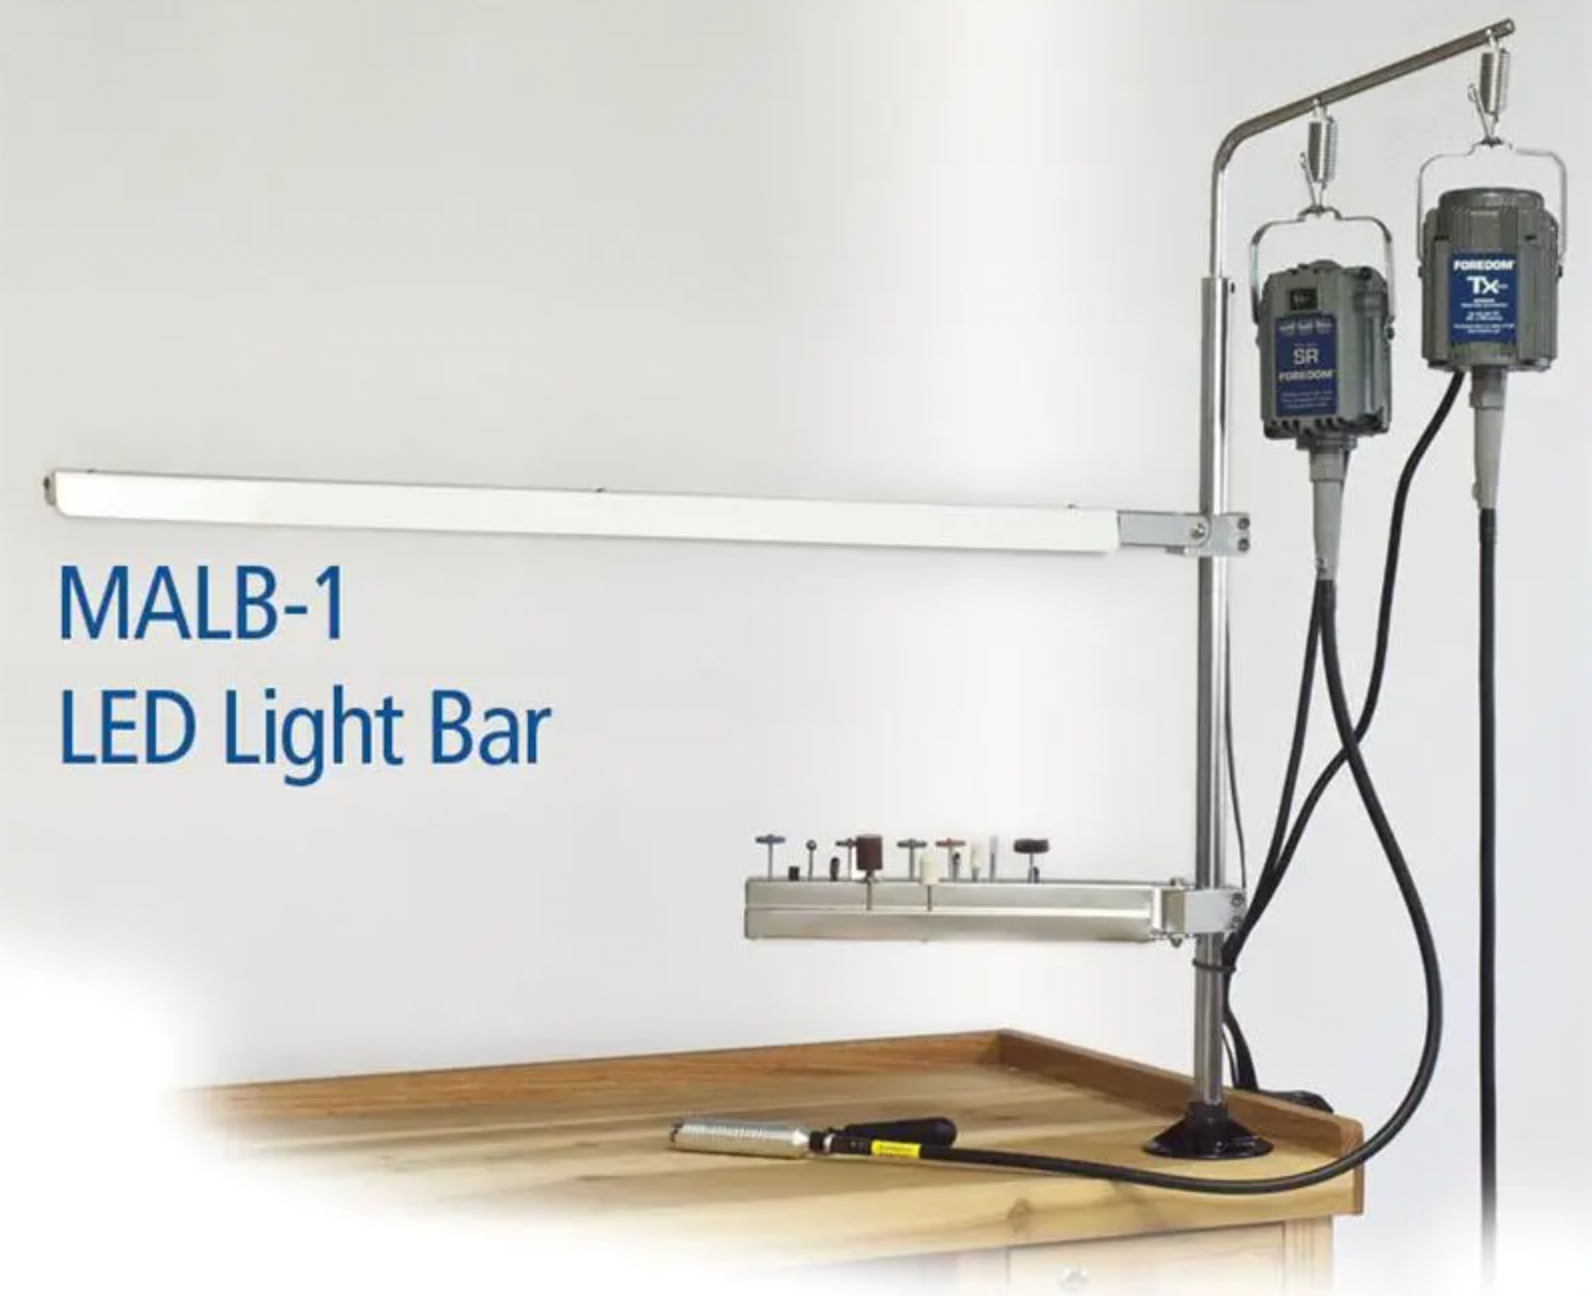 LED Light Bar MALB-1